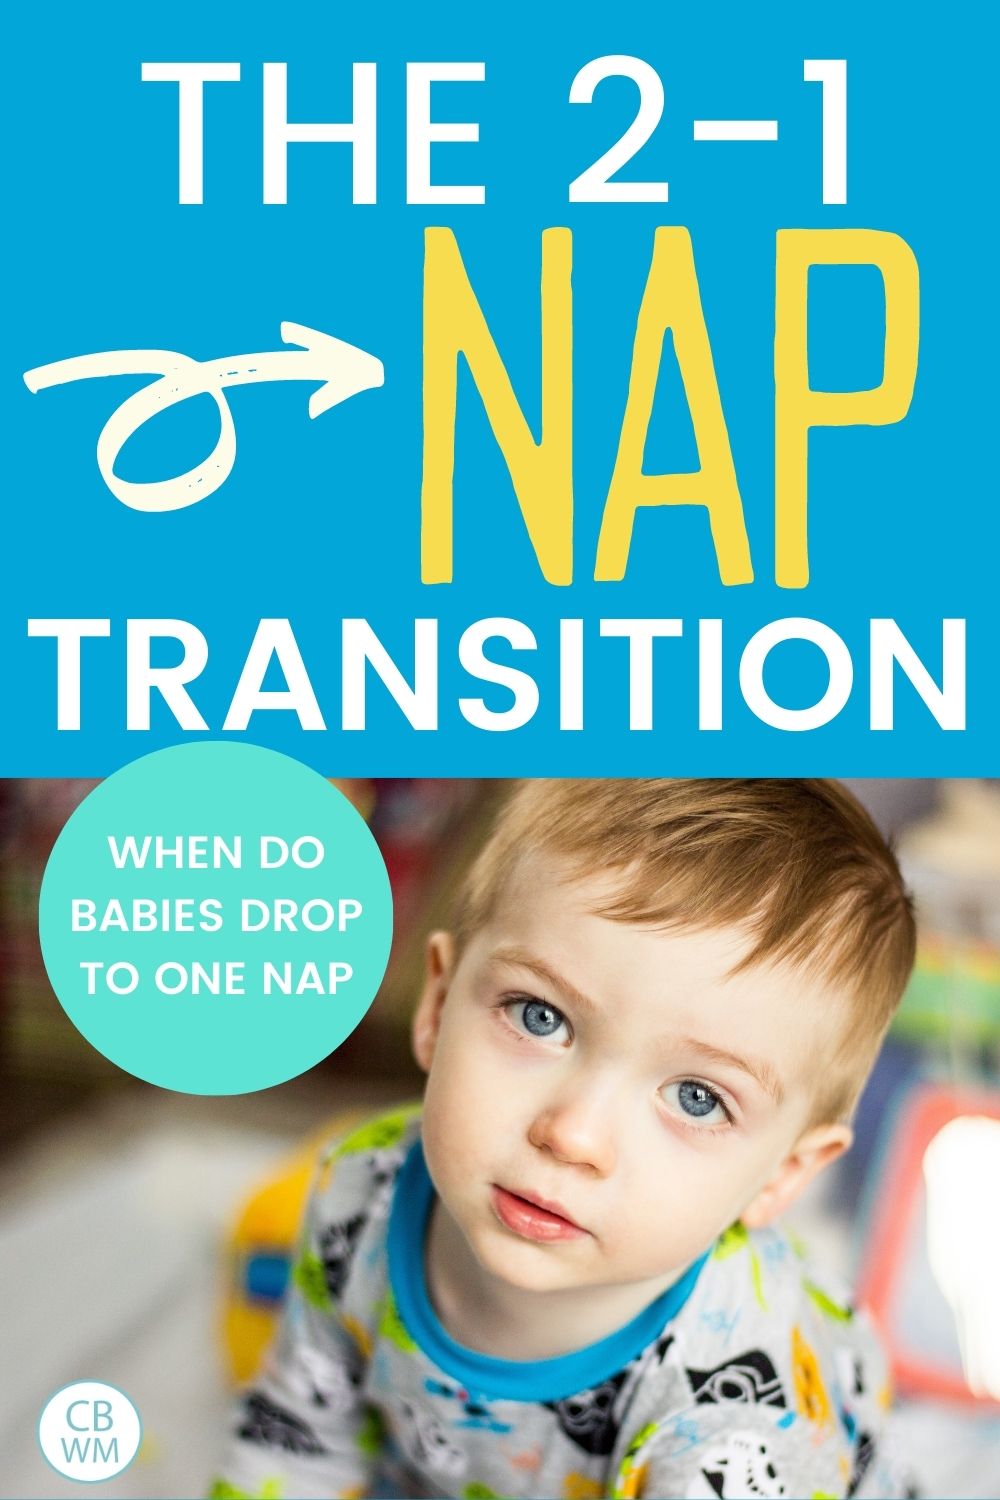 2-1 nap transition